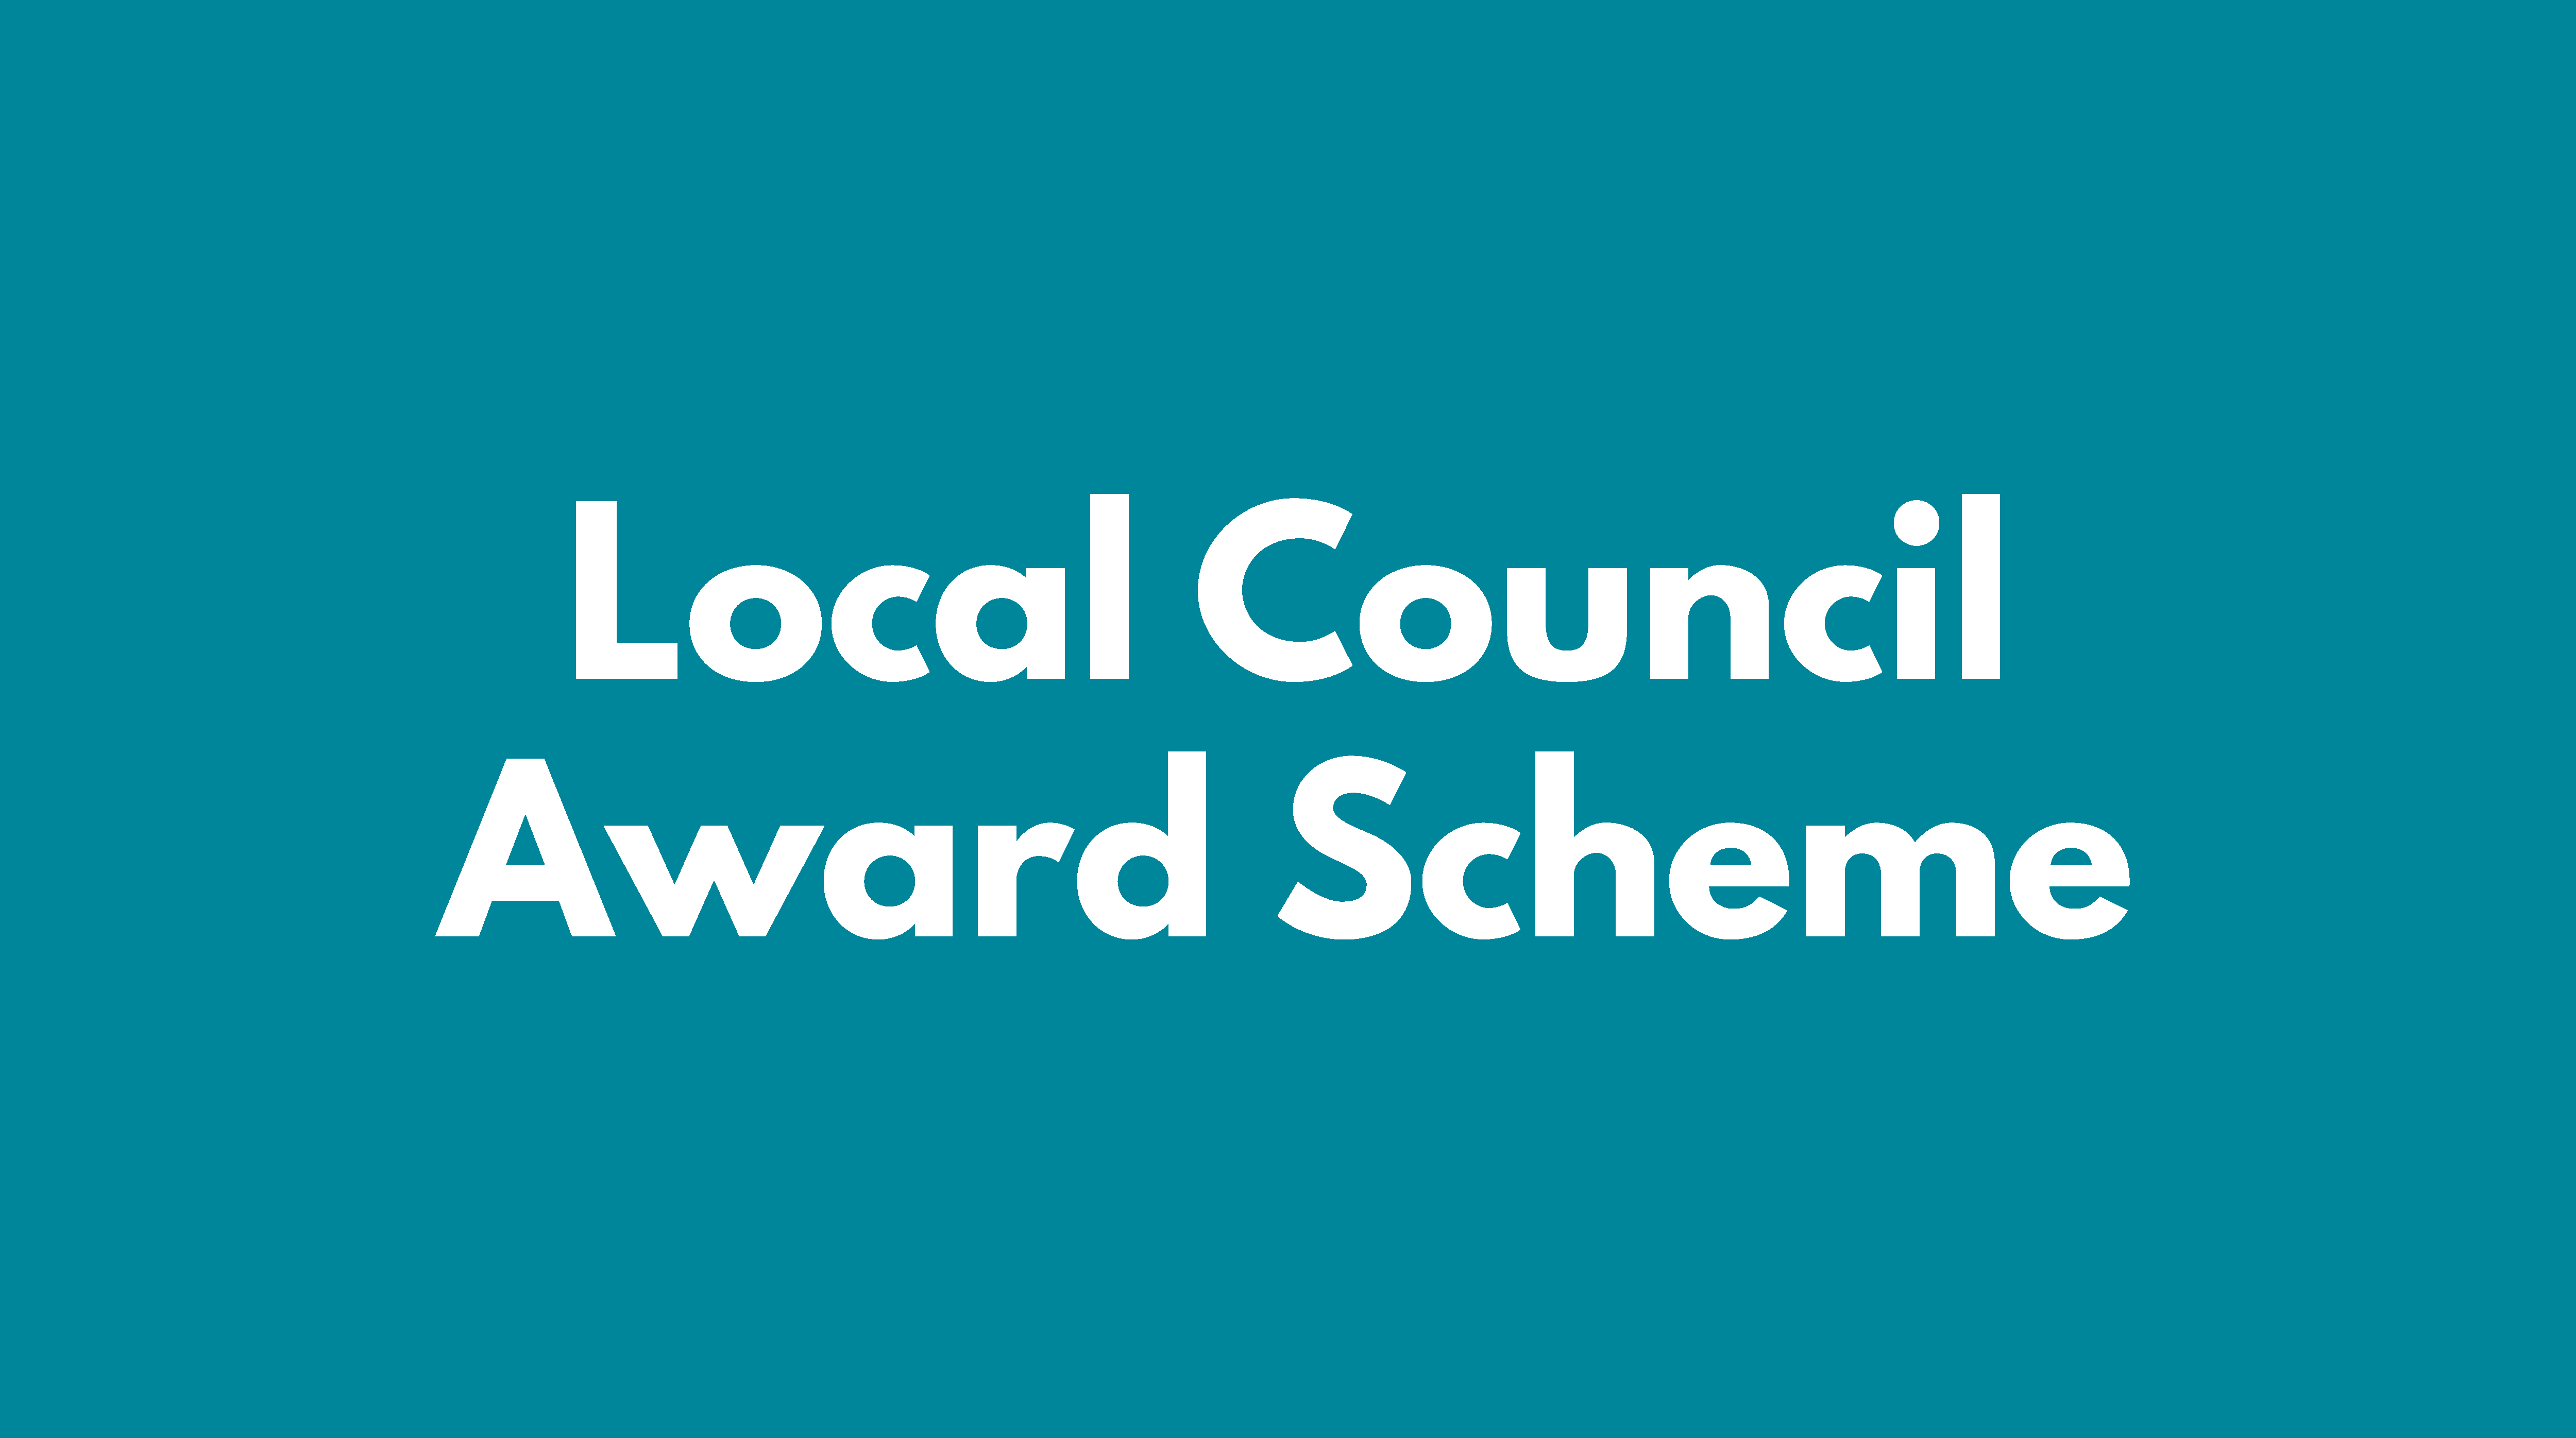 NALC launches the Local Council Award Scheme criteria review consultation